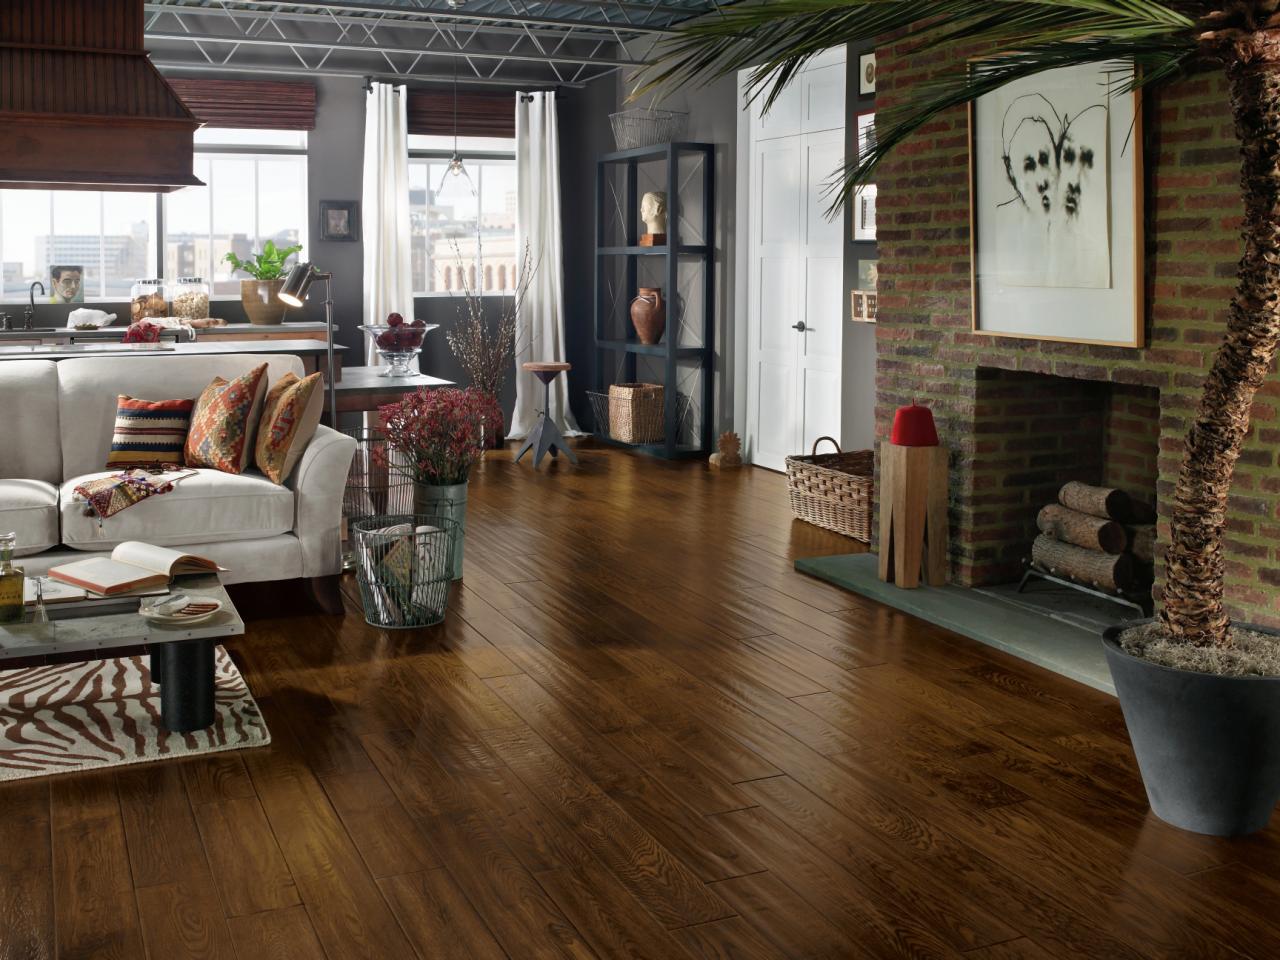 Top Living Room Flooring Options, Best Hardwood Floors For The Money